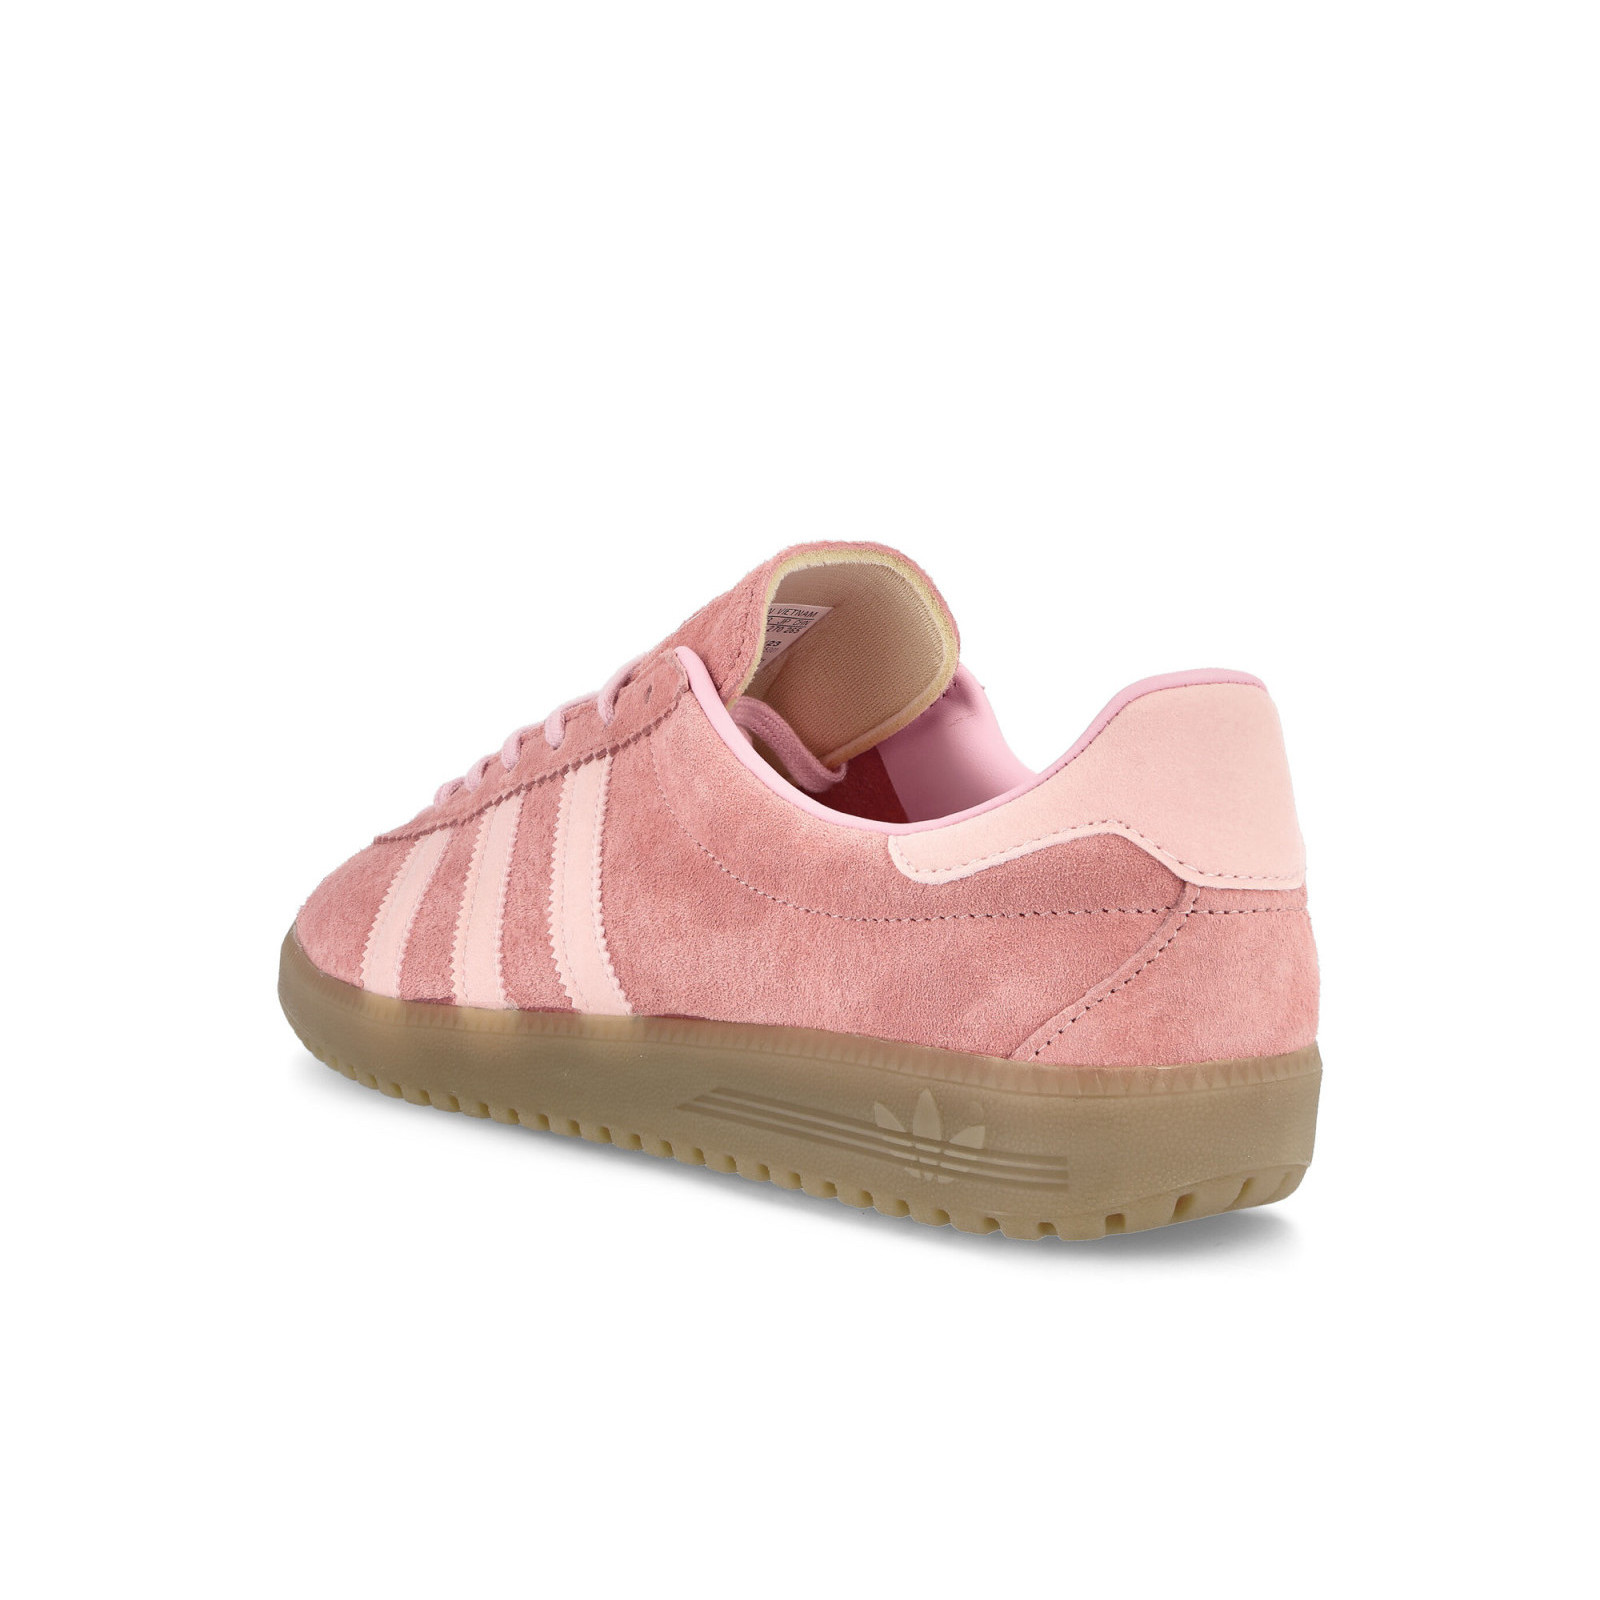 Adidas Bermuda
Glow Pink / Clear